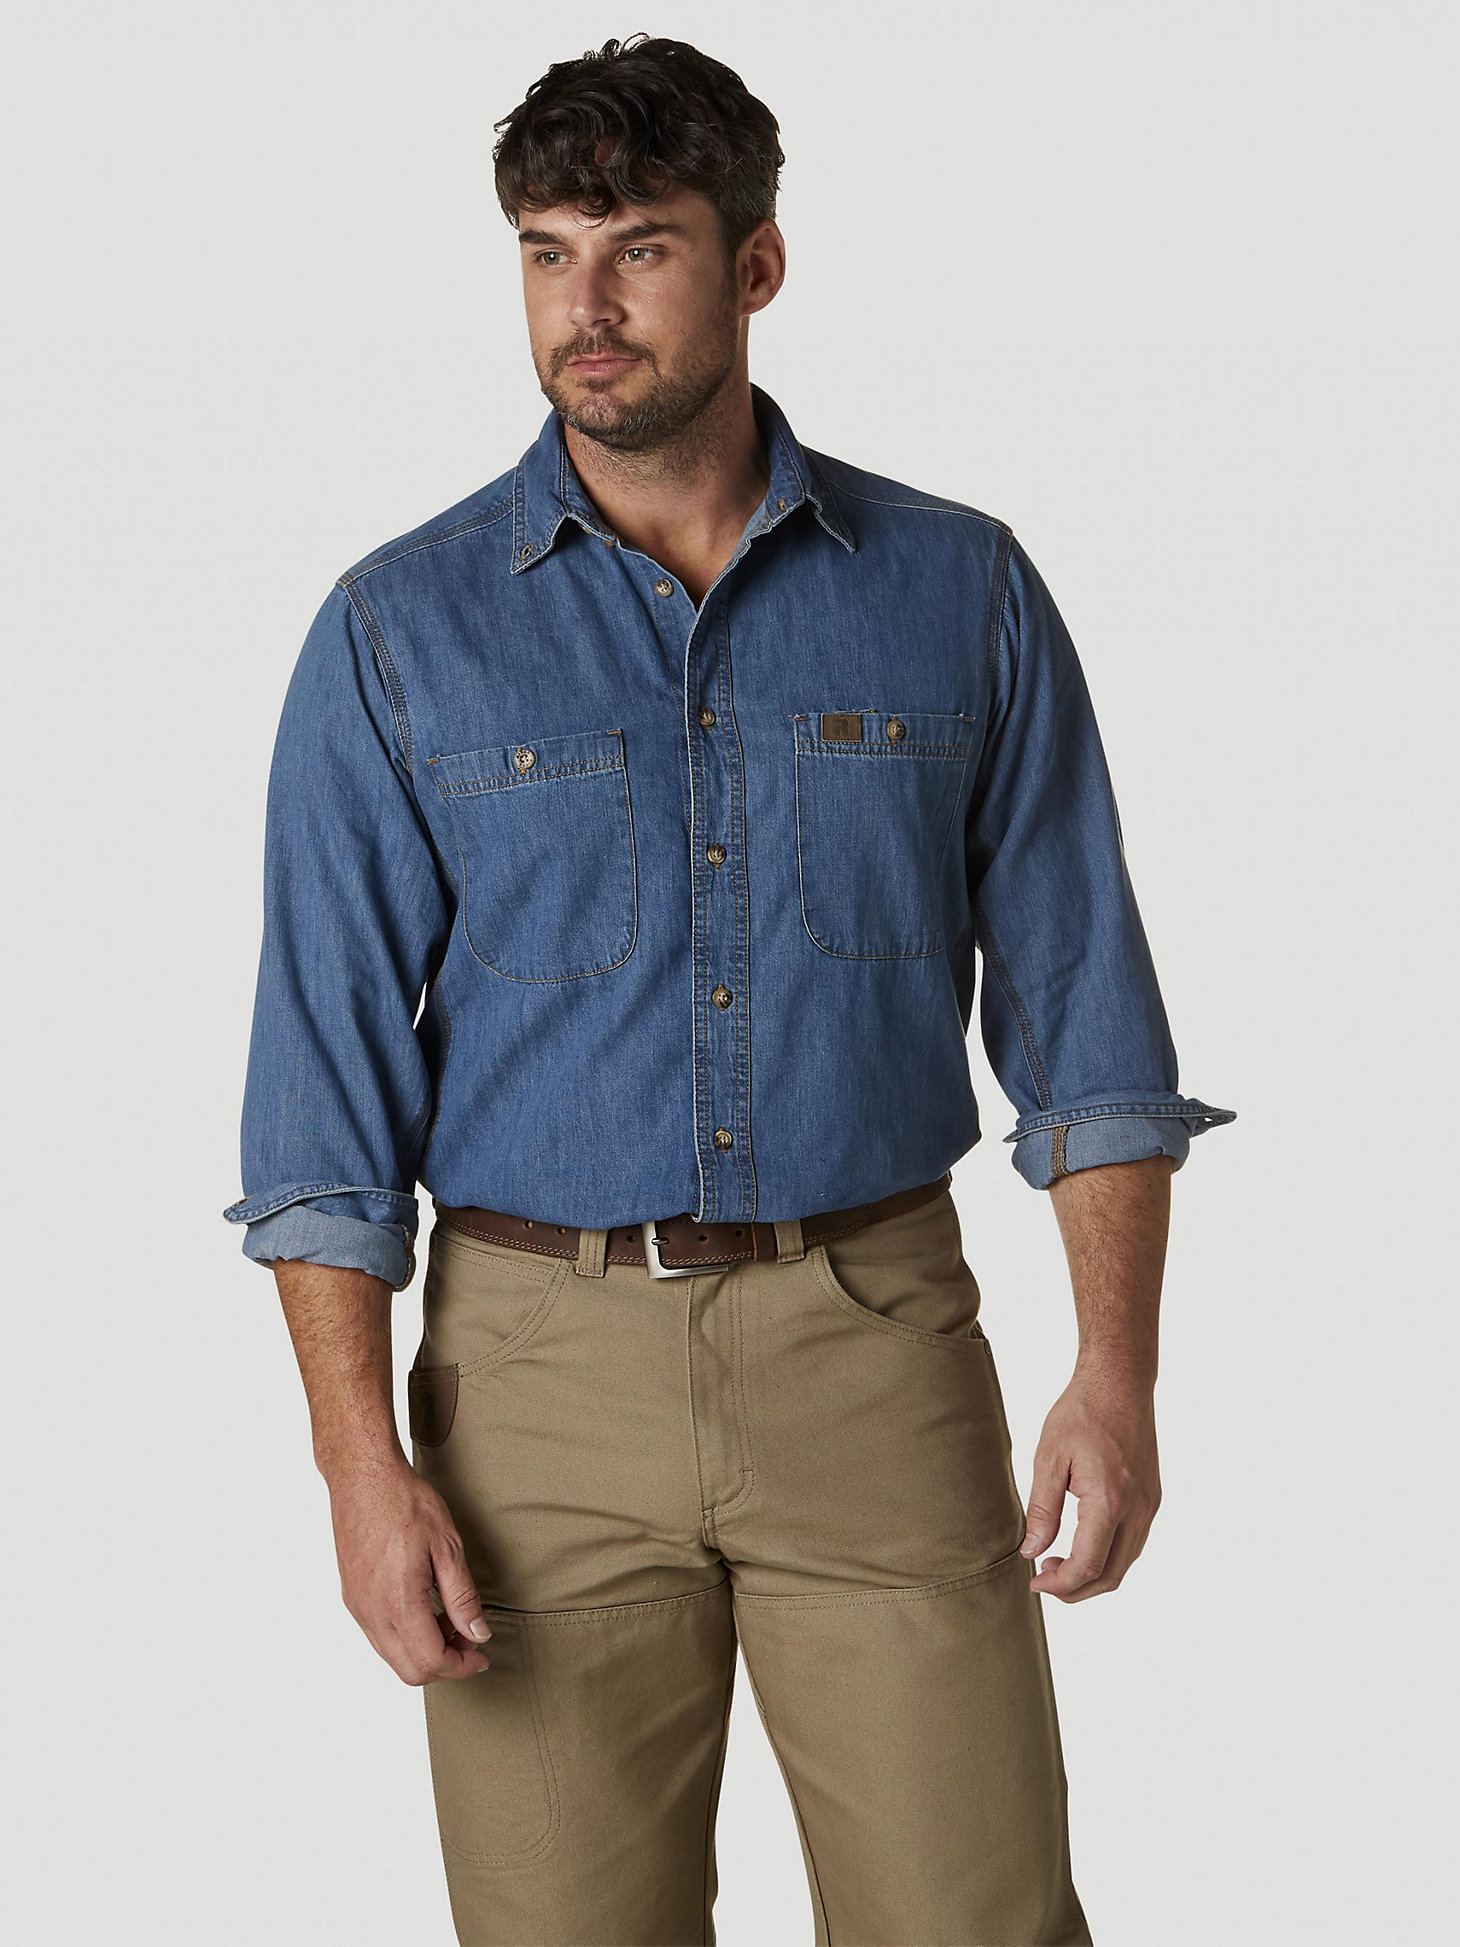 Wrangler® RIGGS Workwear® Long Sleeve Button Down Solid Denim Work Shirt in Antique alternative view 1